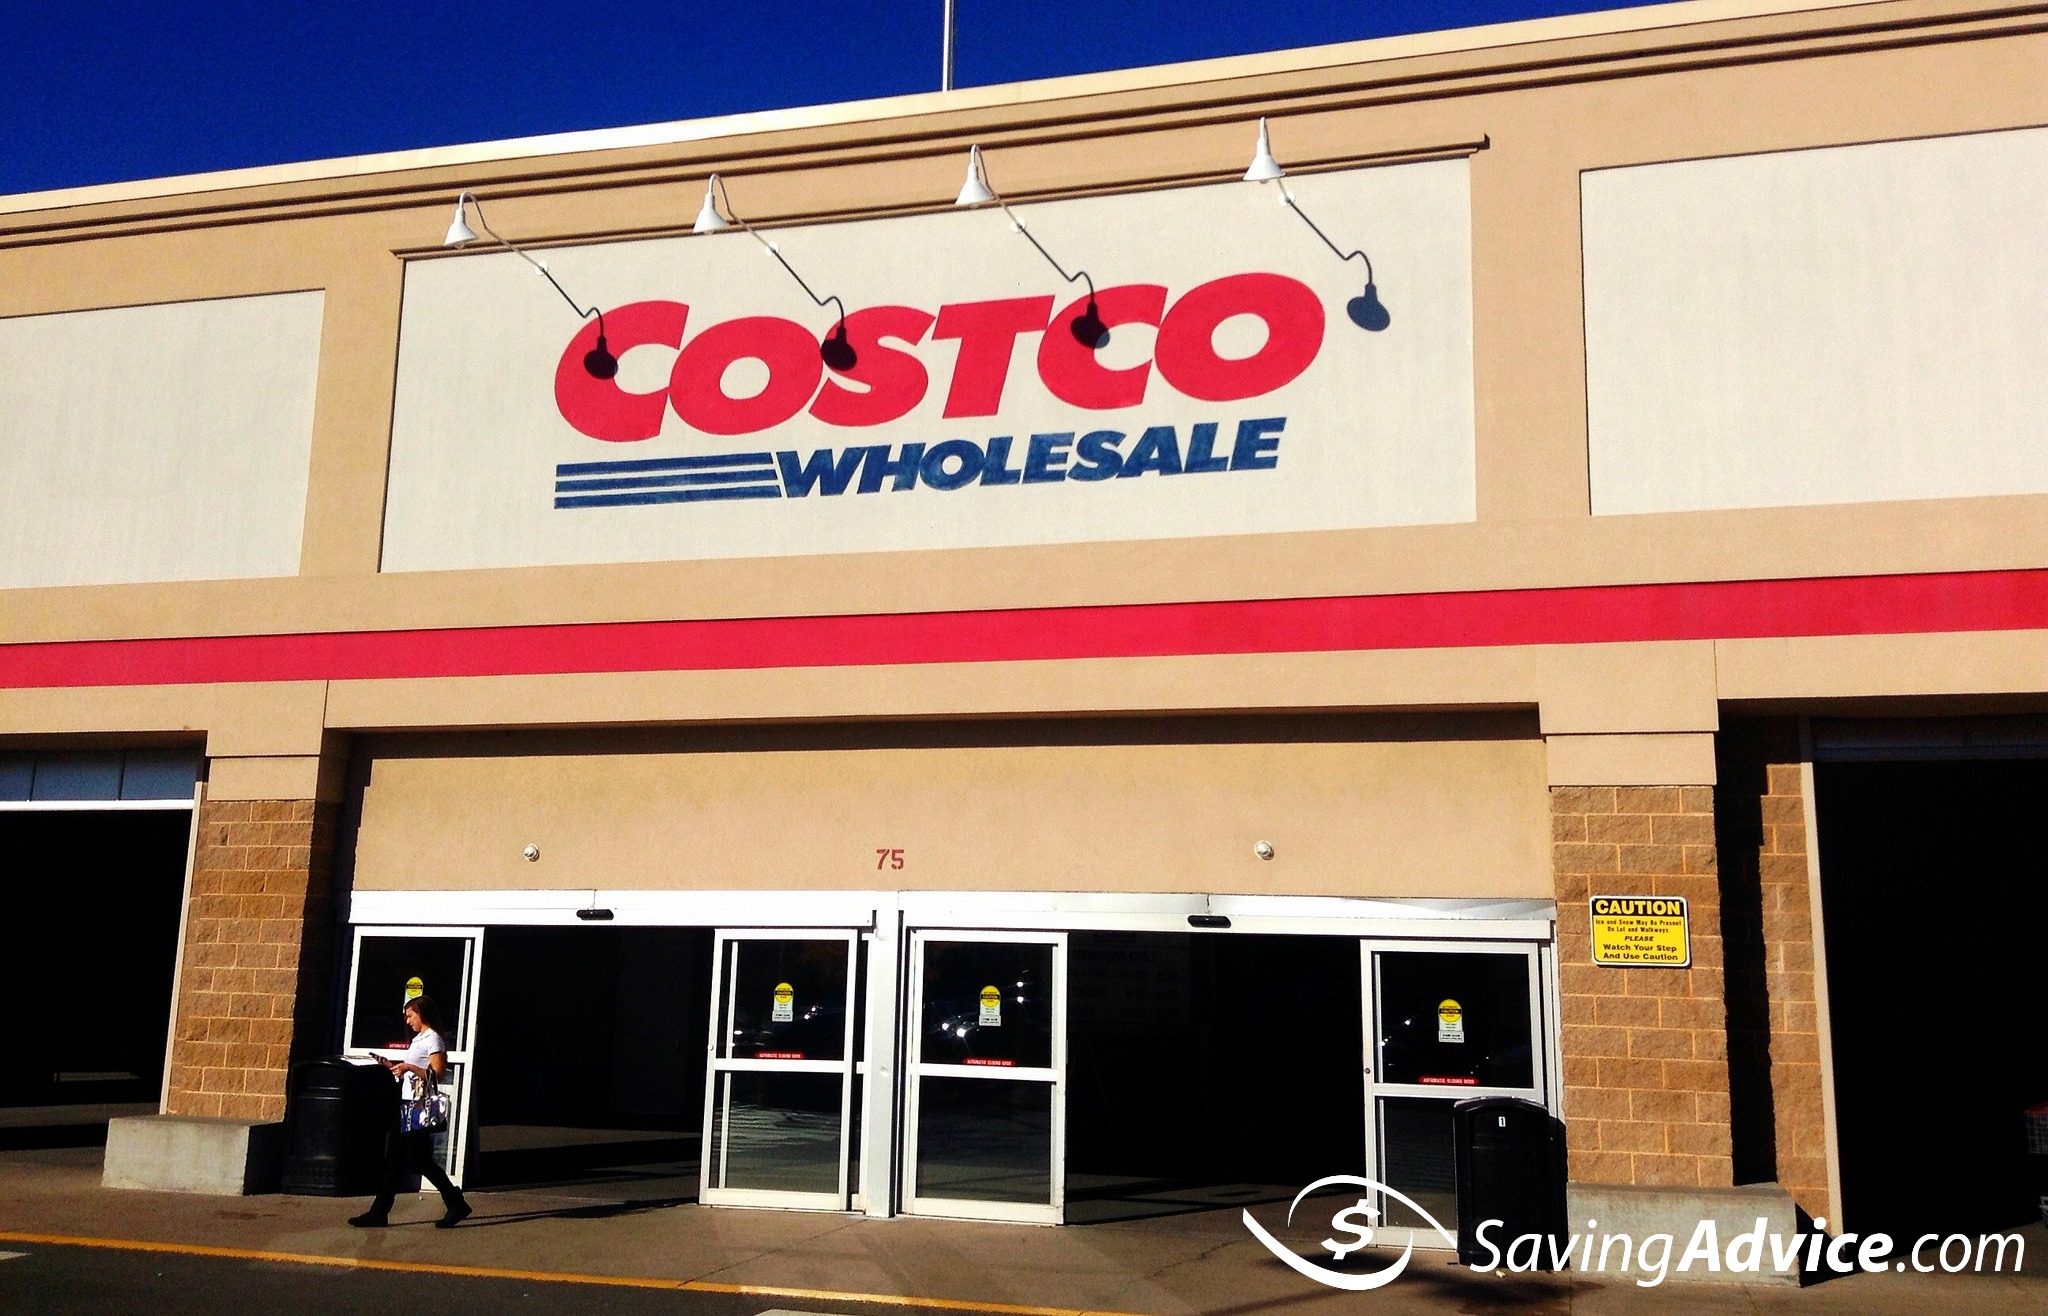 Is Costco Open on Sunday? Blog